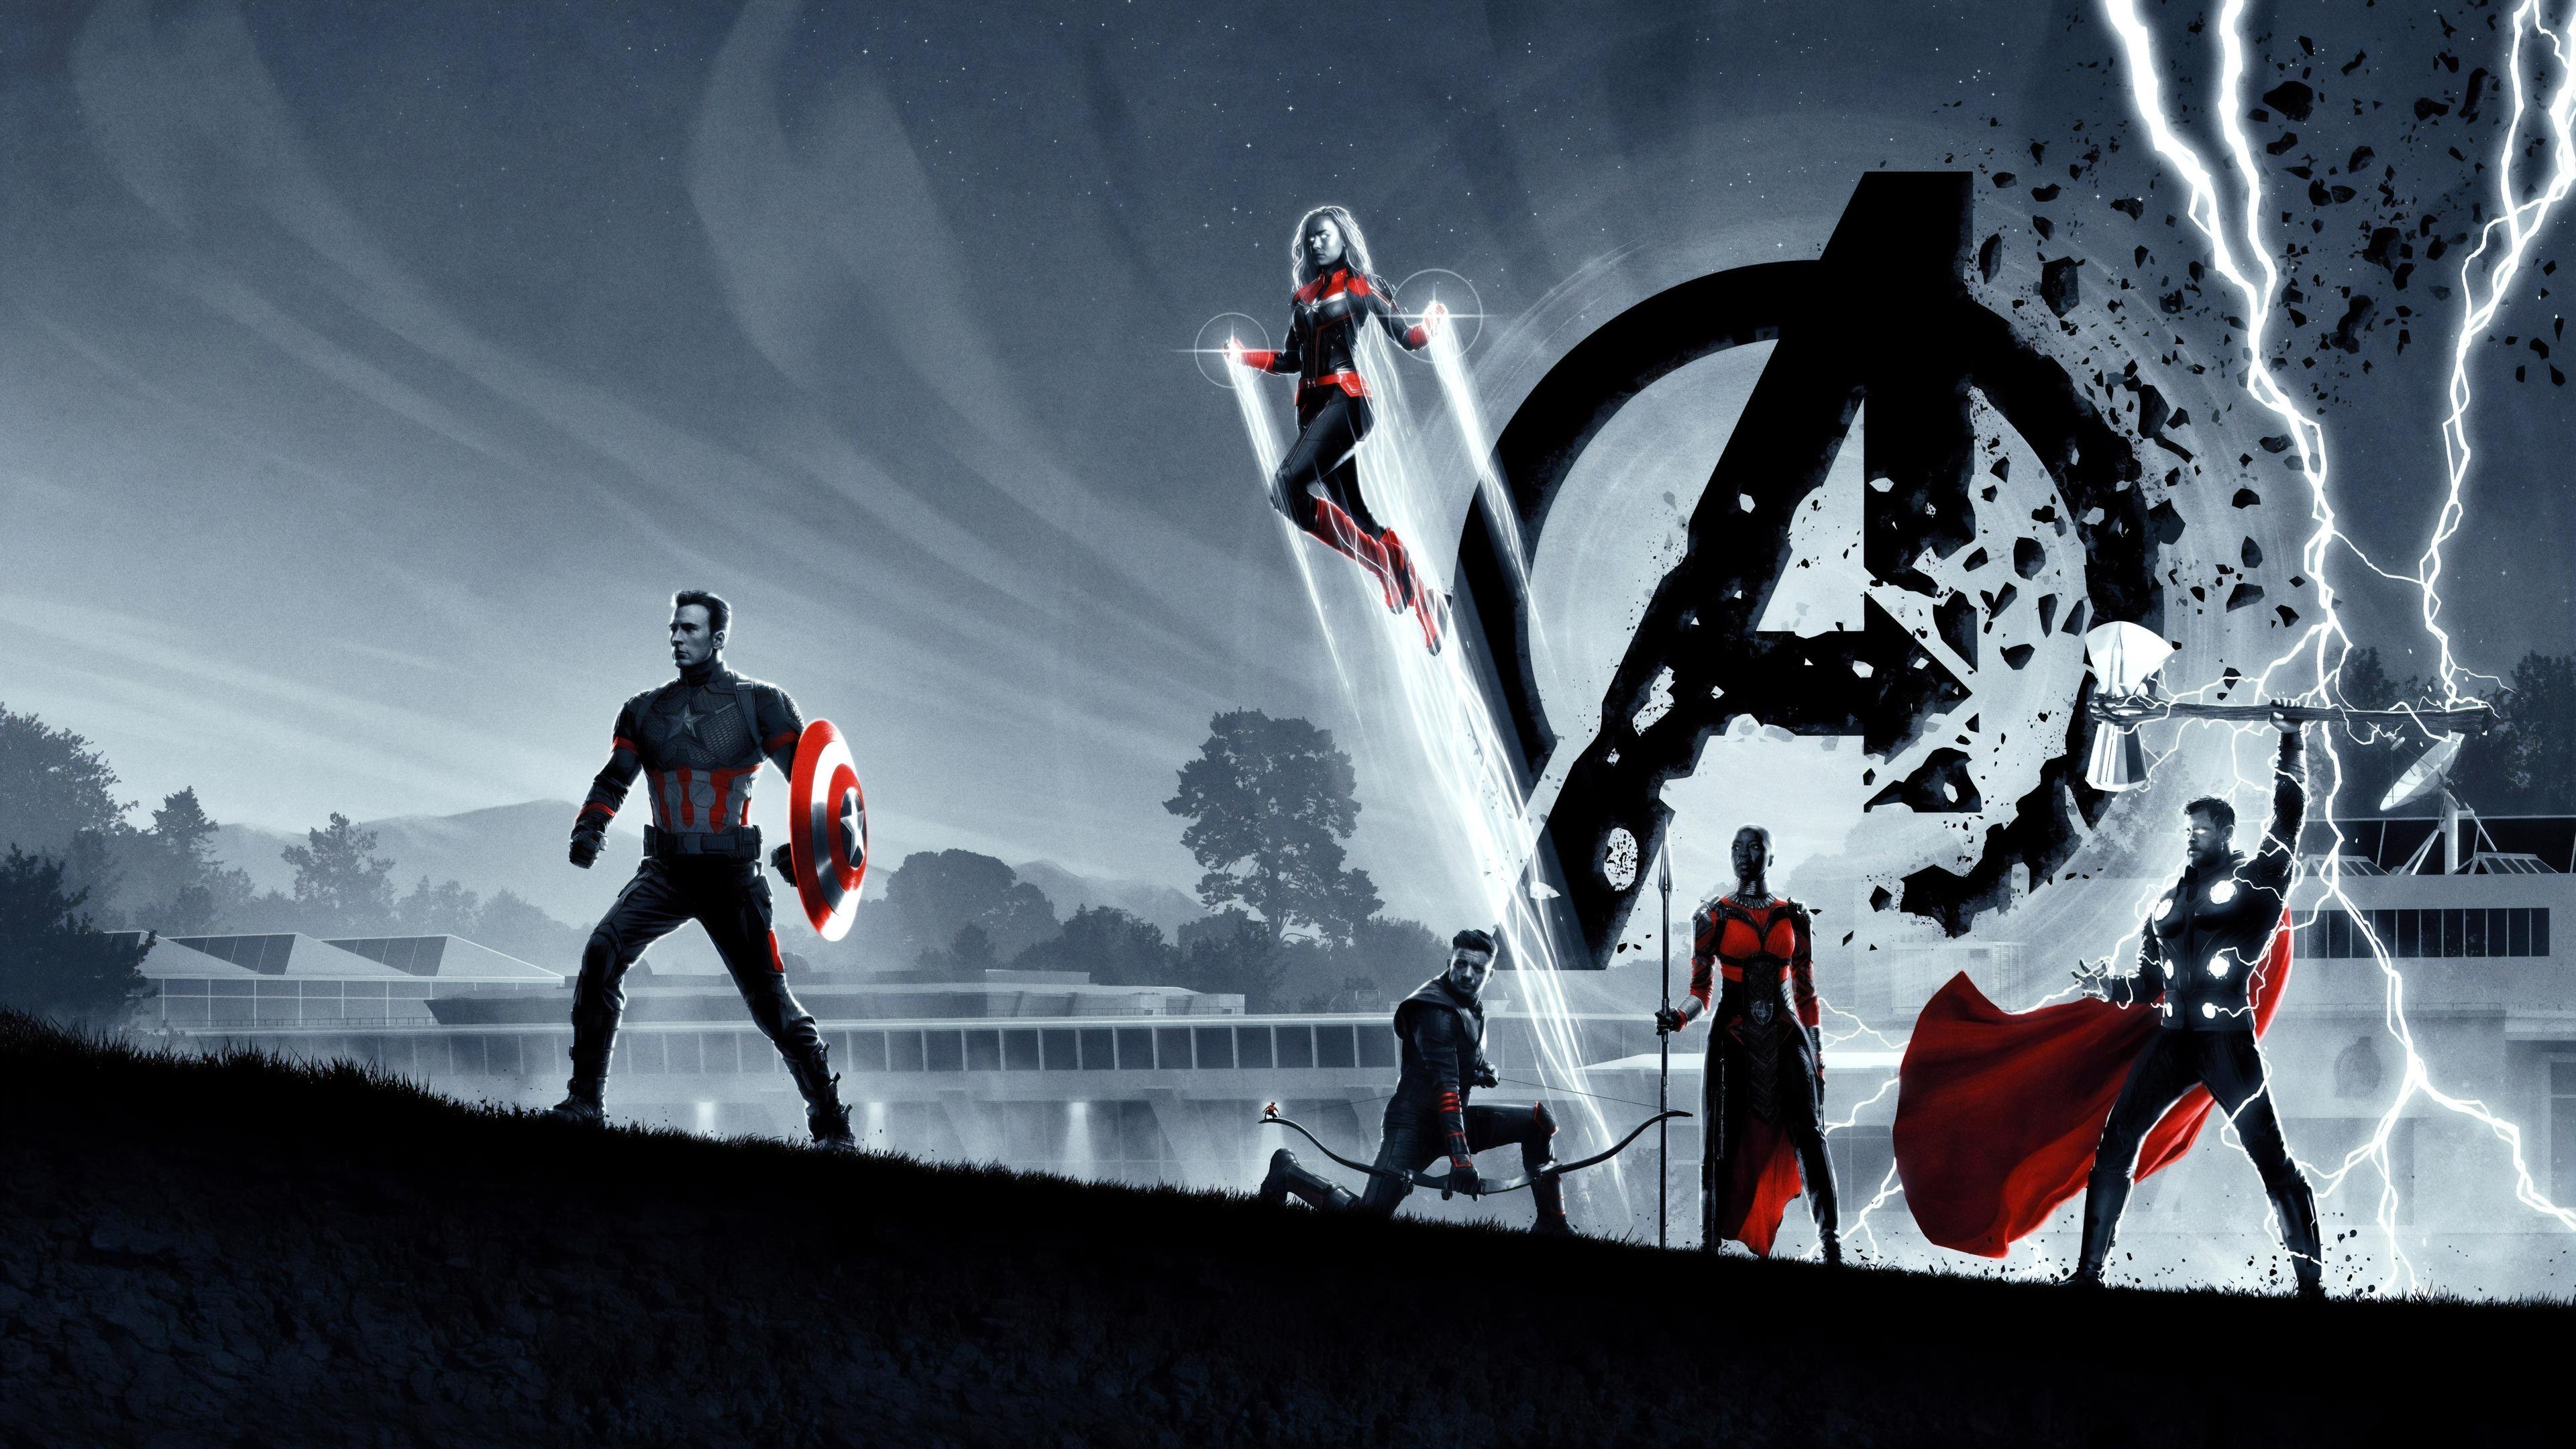 Wallpapers 4k Avengers Endgame 4k 2019 2019 movies wallpapers, 4k